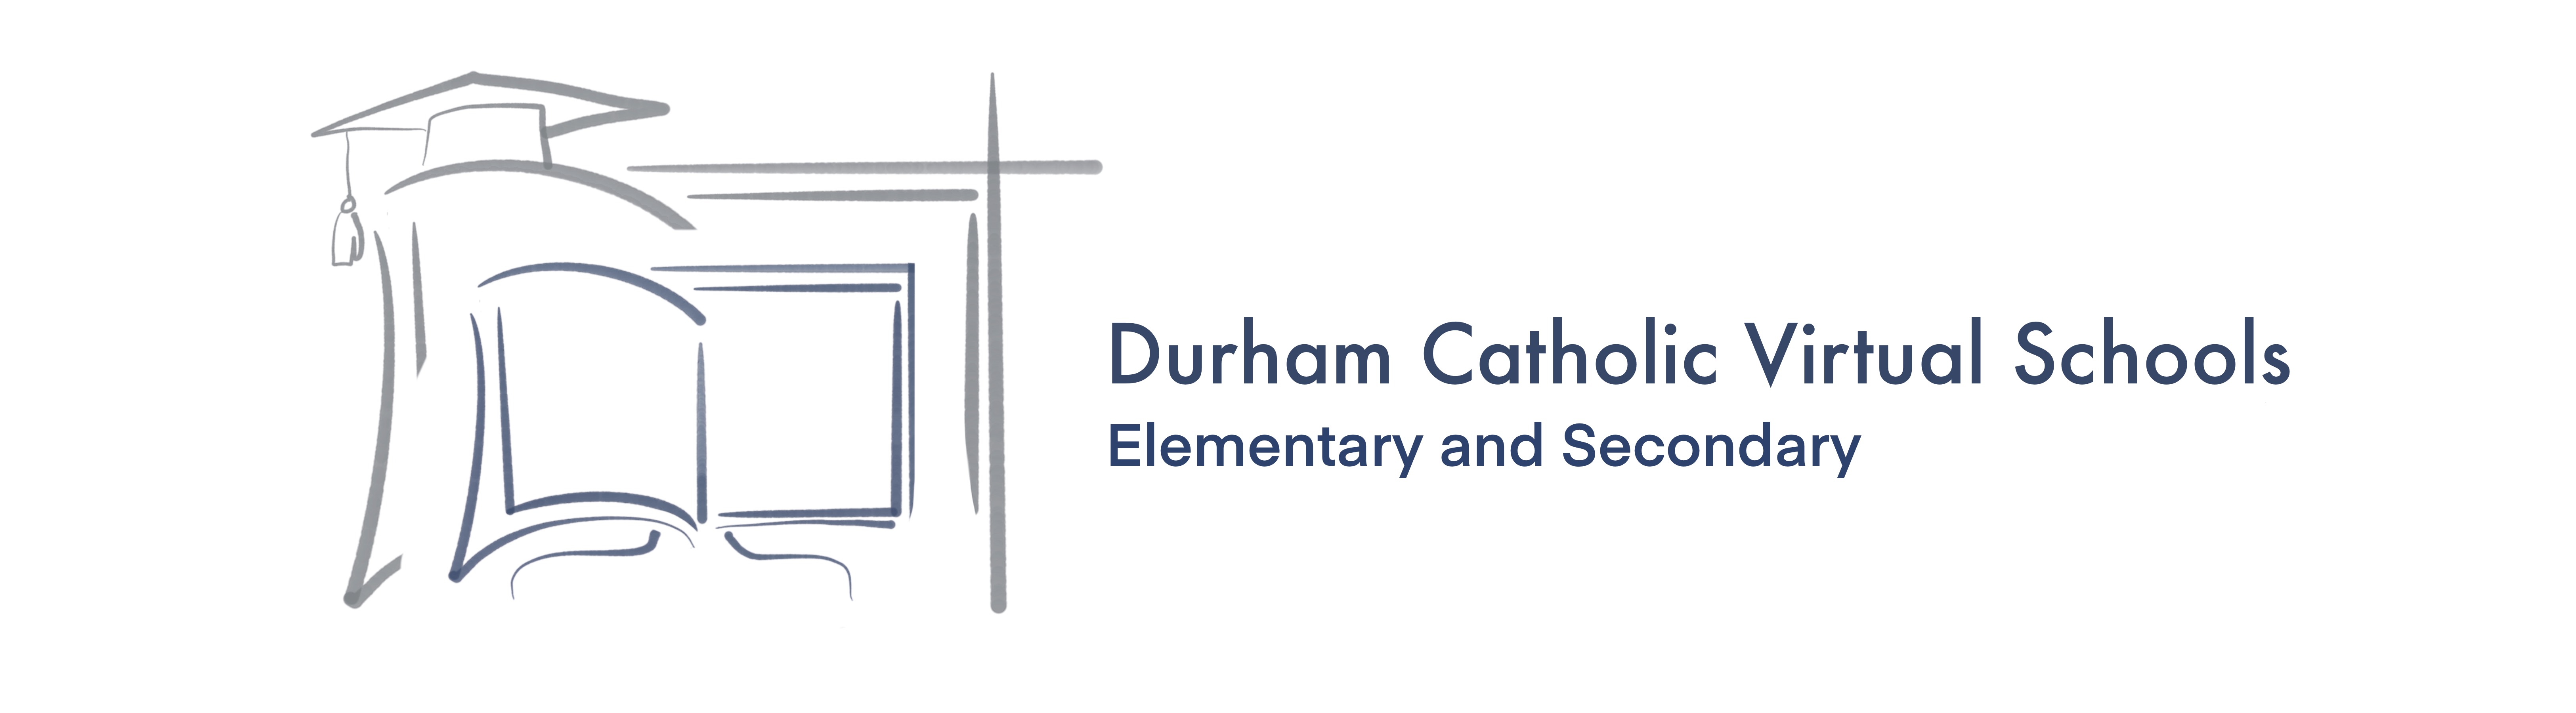 Durham Catholic Virtual Elementary and Secondary Schools logo